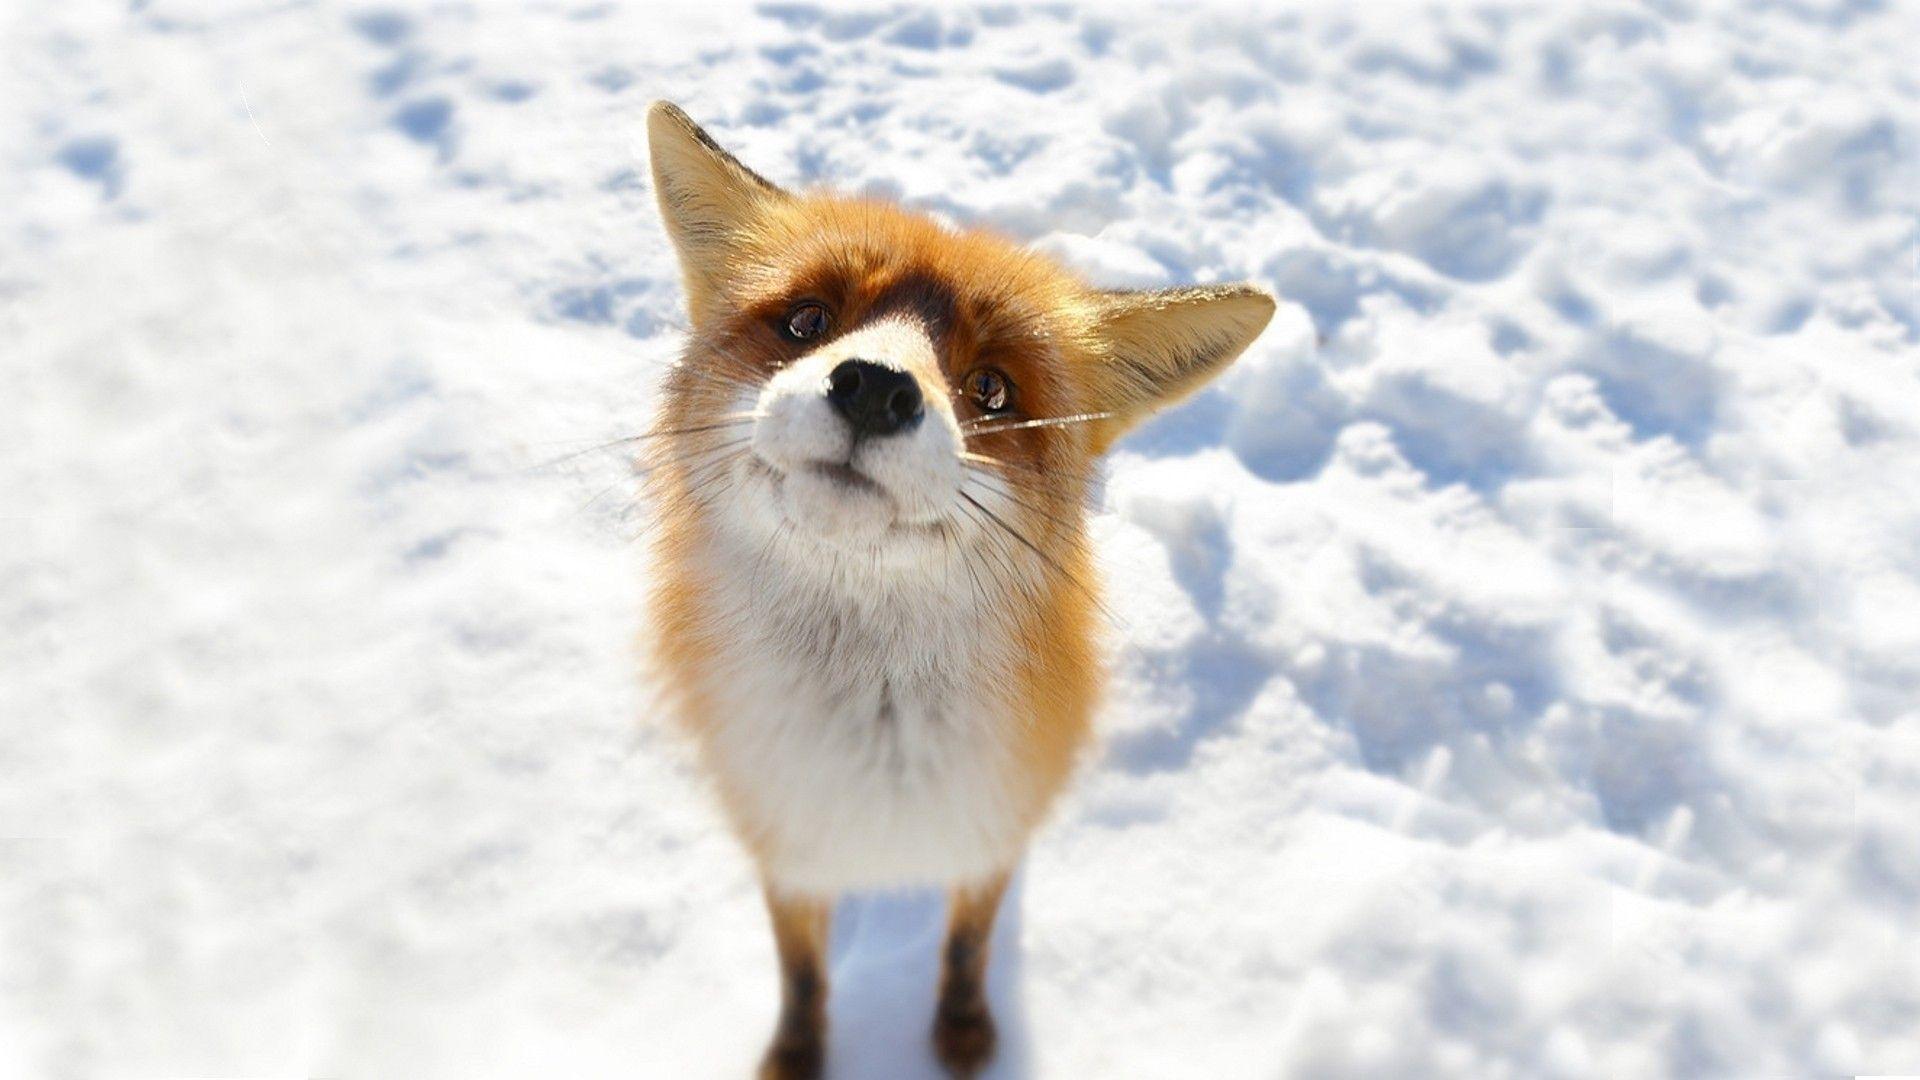 My adorable fox wallpaper collection